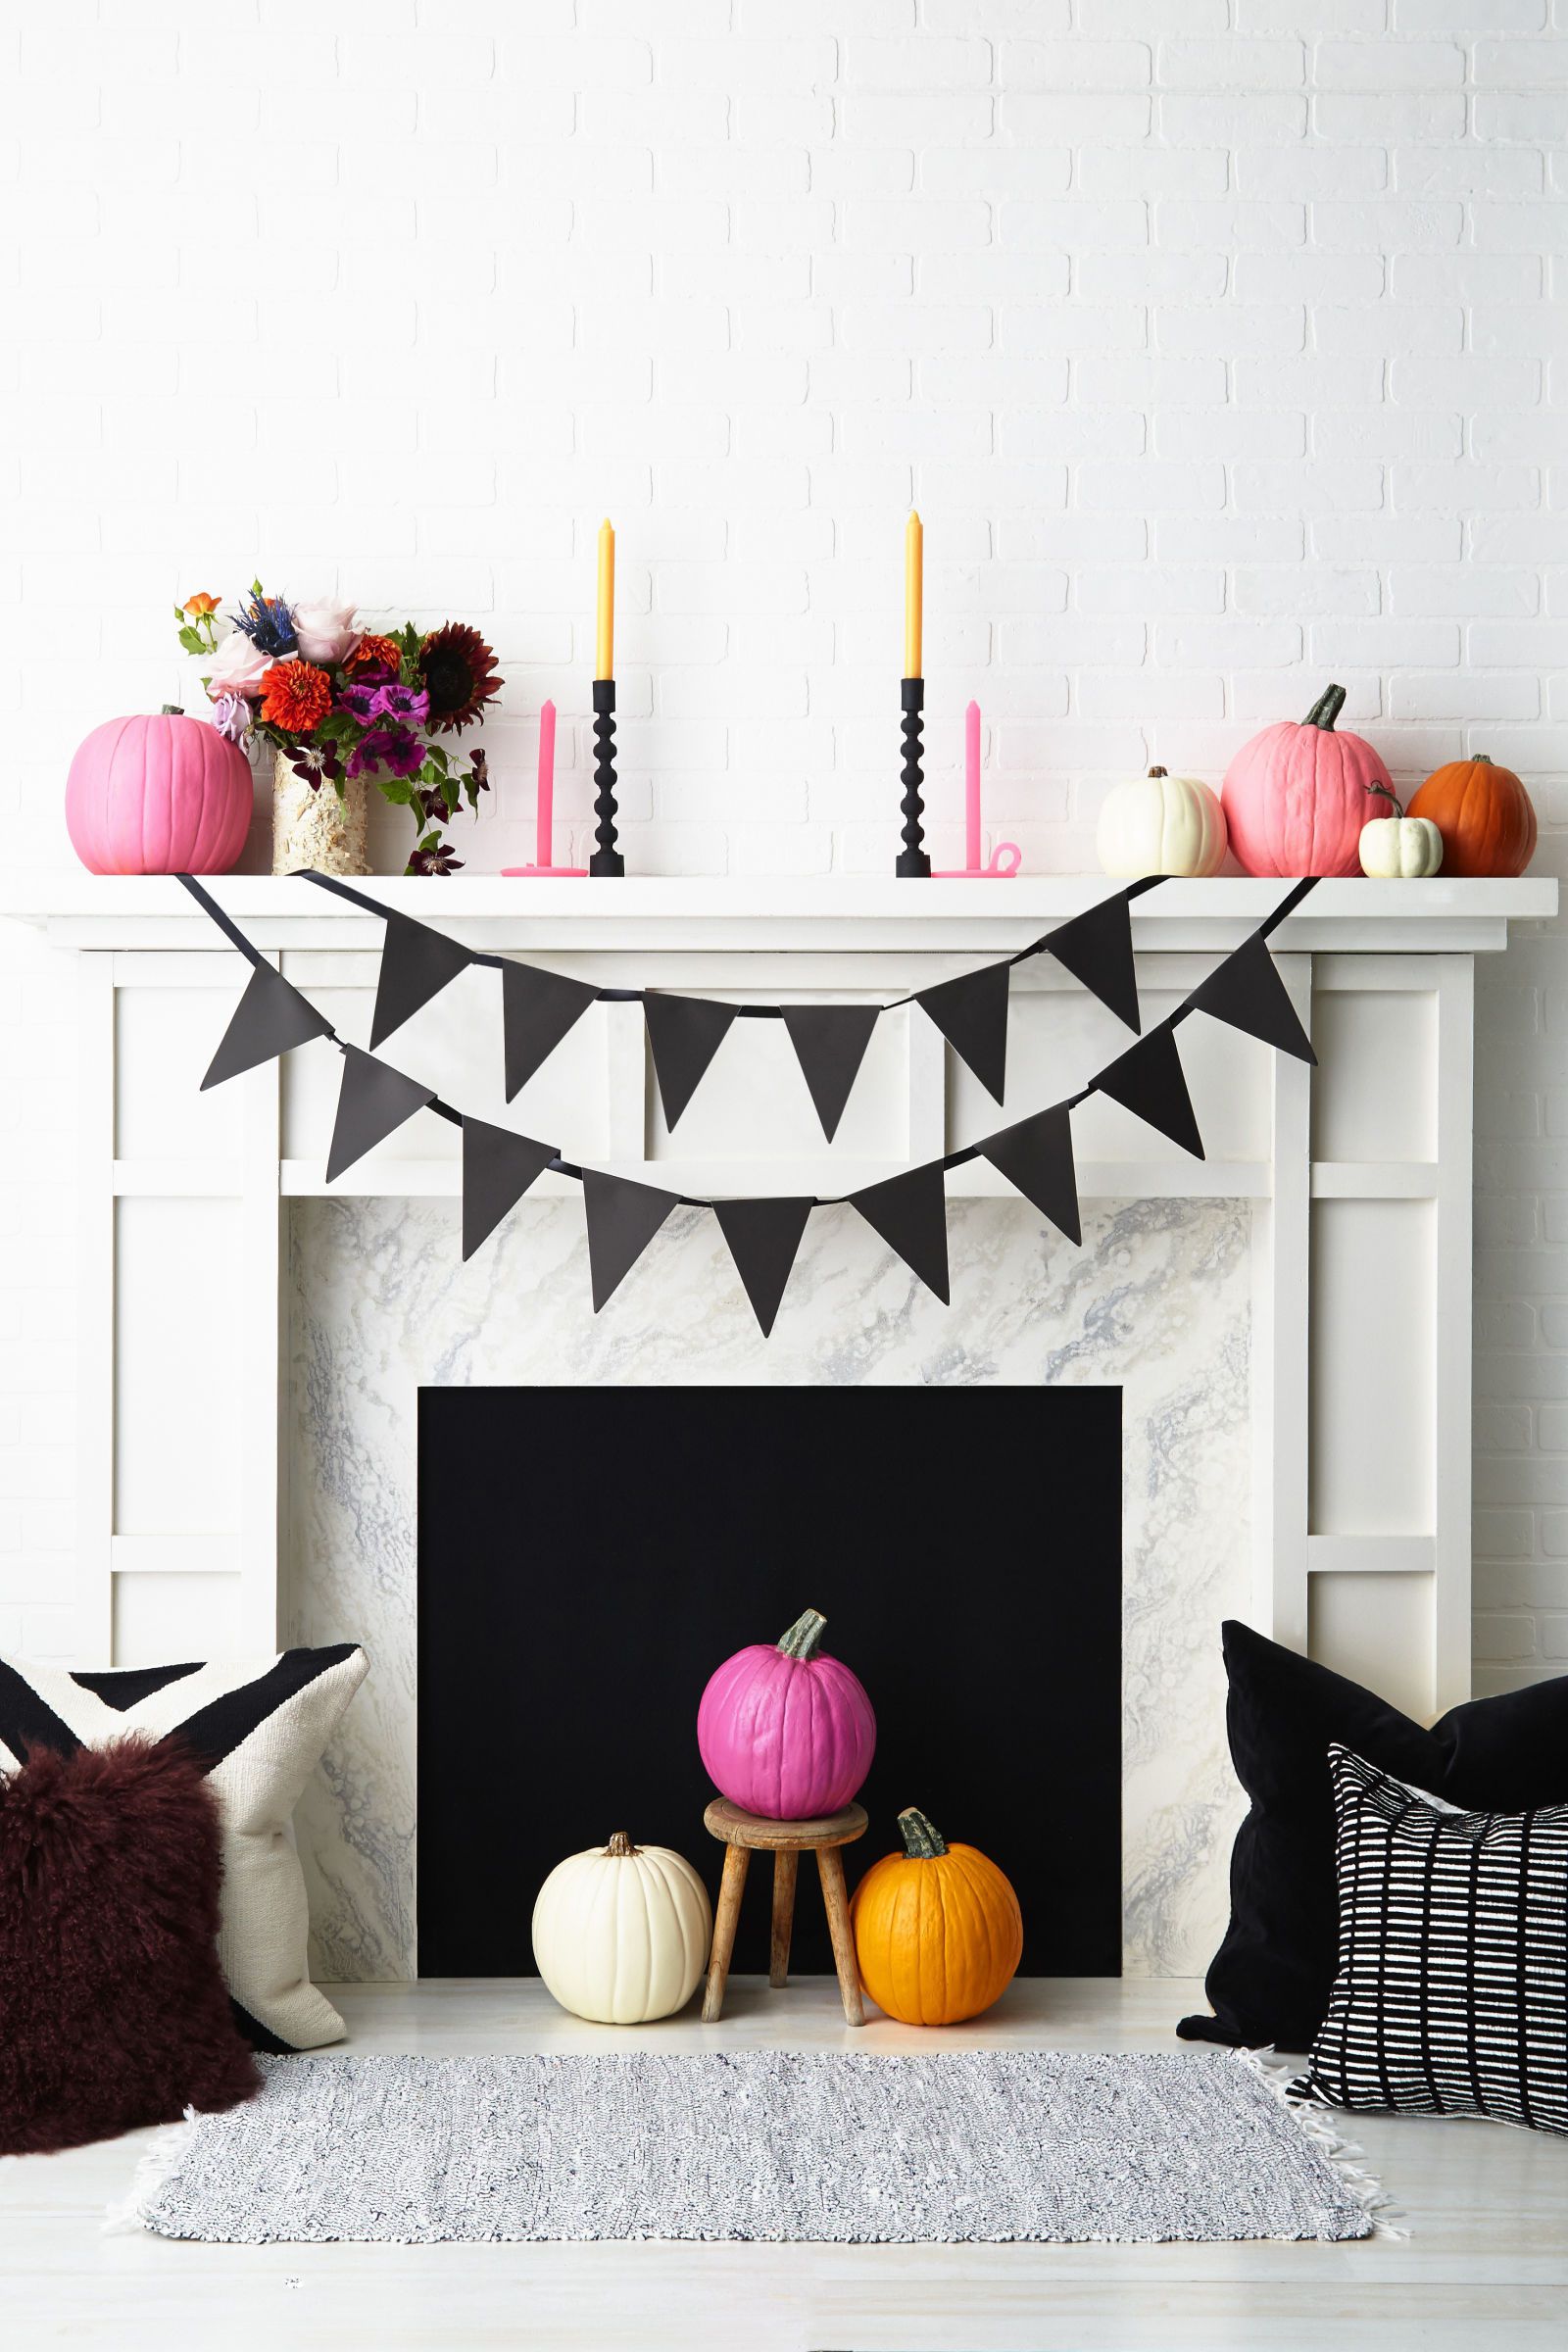 20+ DIY Halloween Decorations - Cool Homemade Halloween Decor